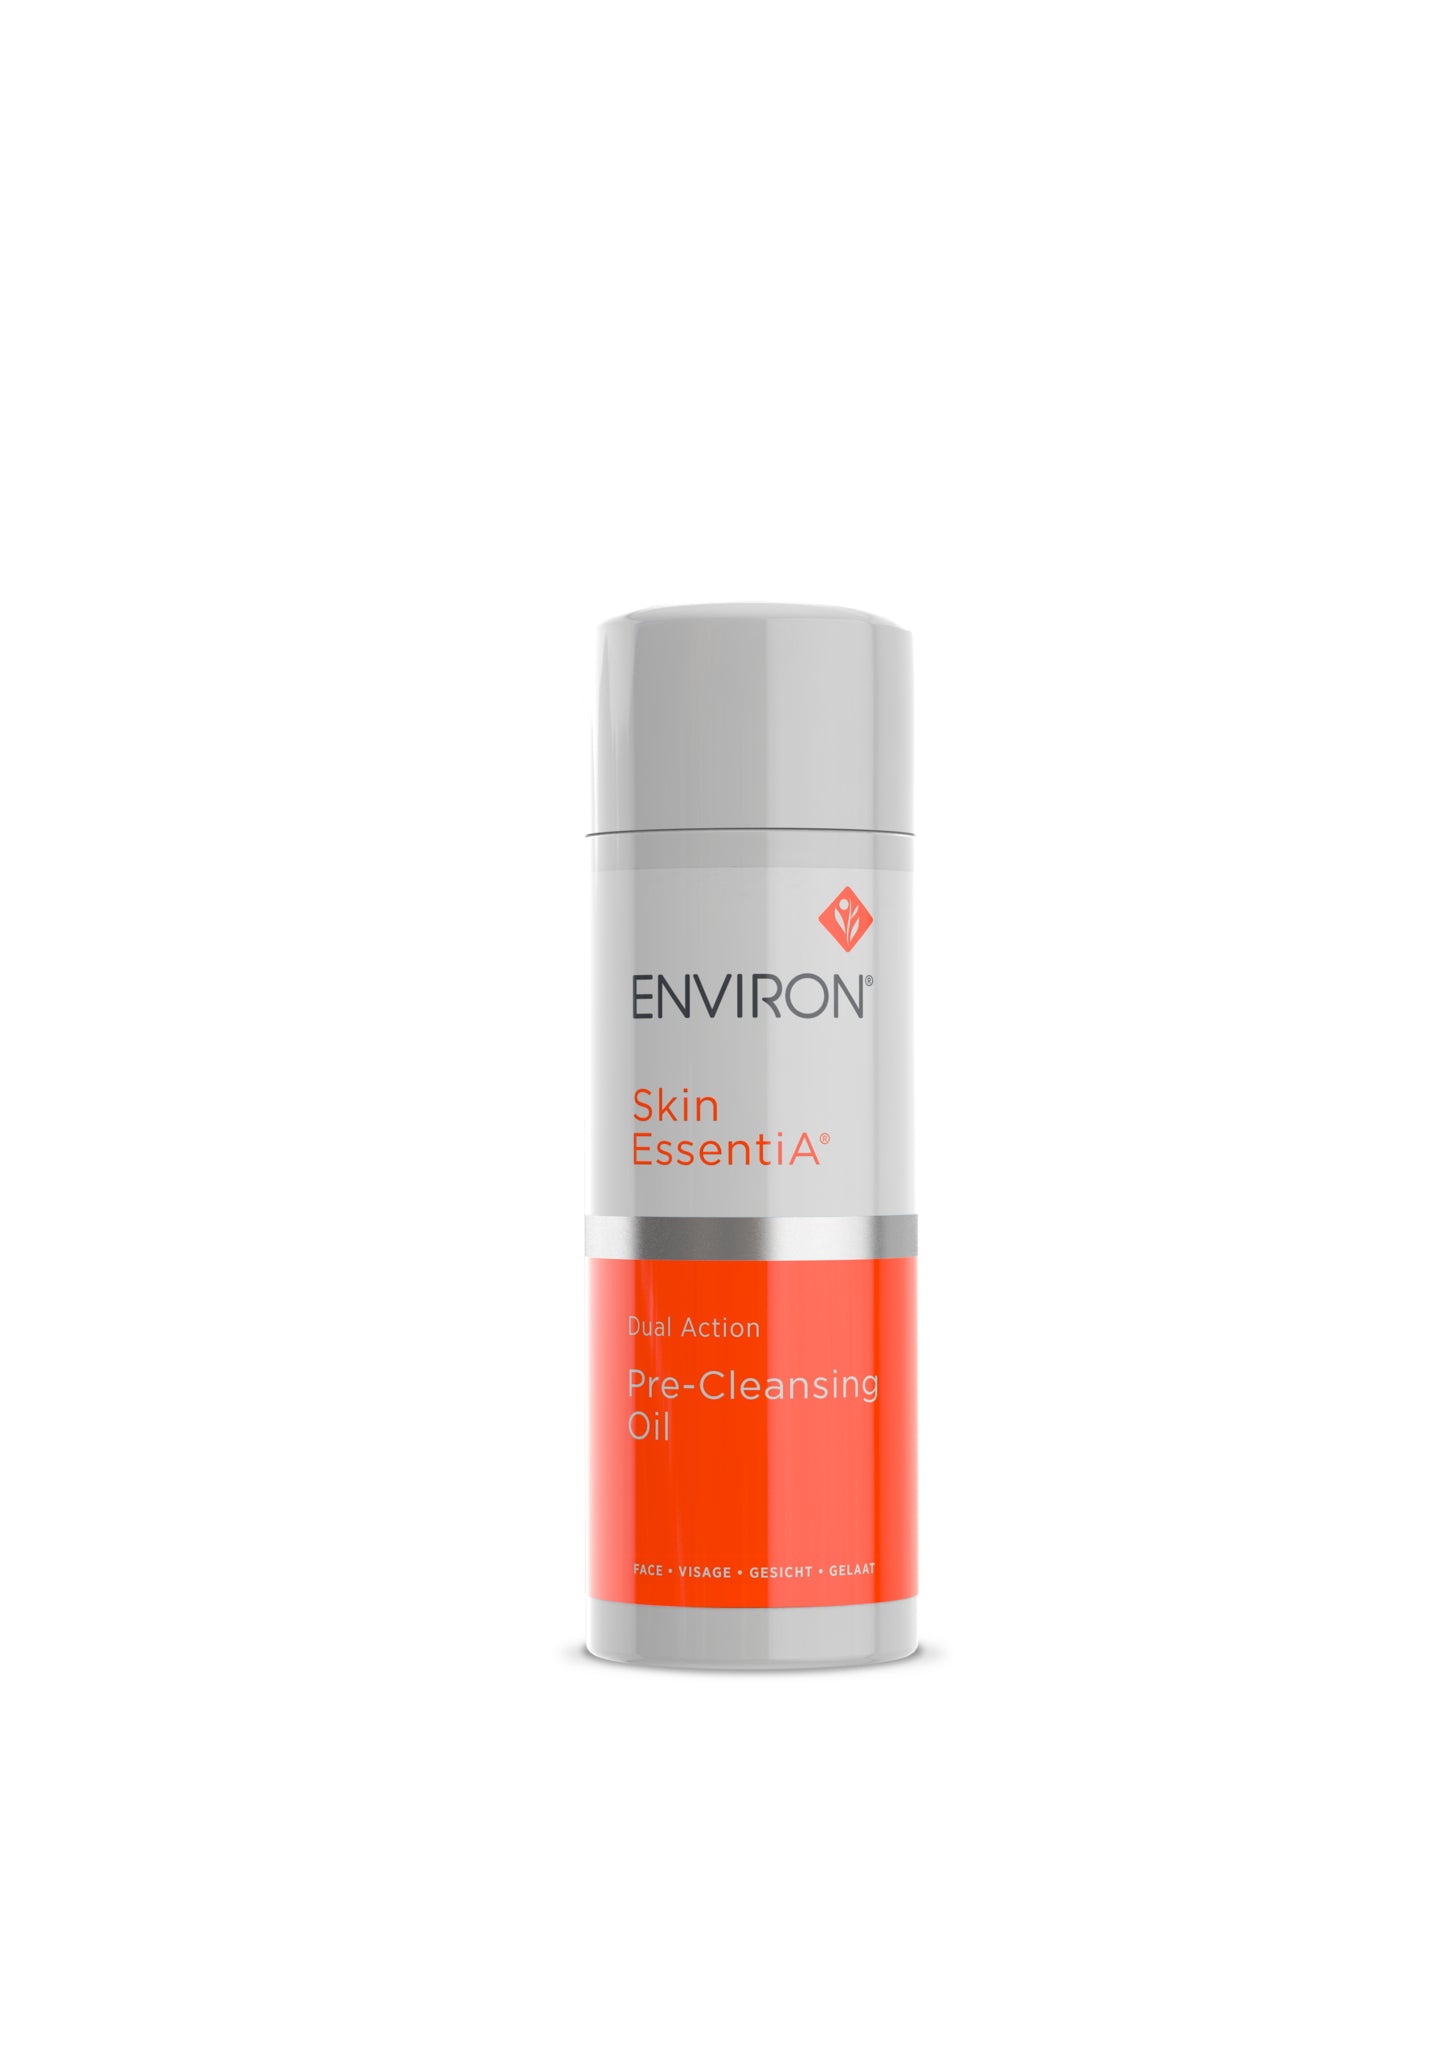 Environ Skin EssentiA® range - Dual Action Pre-Cleansing Oil